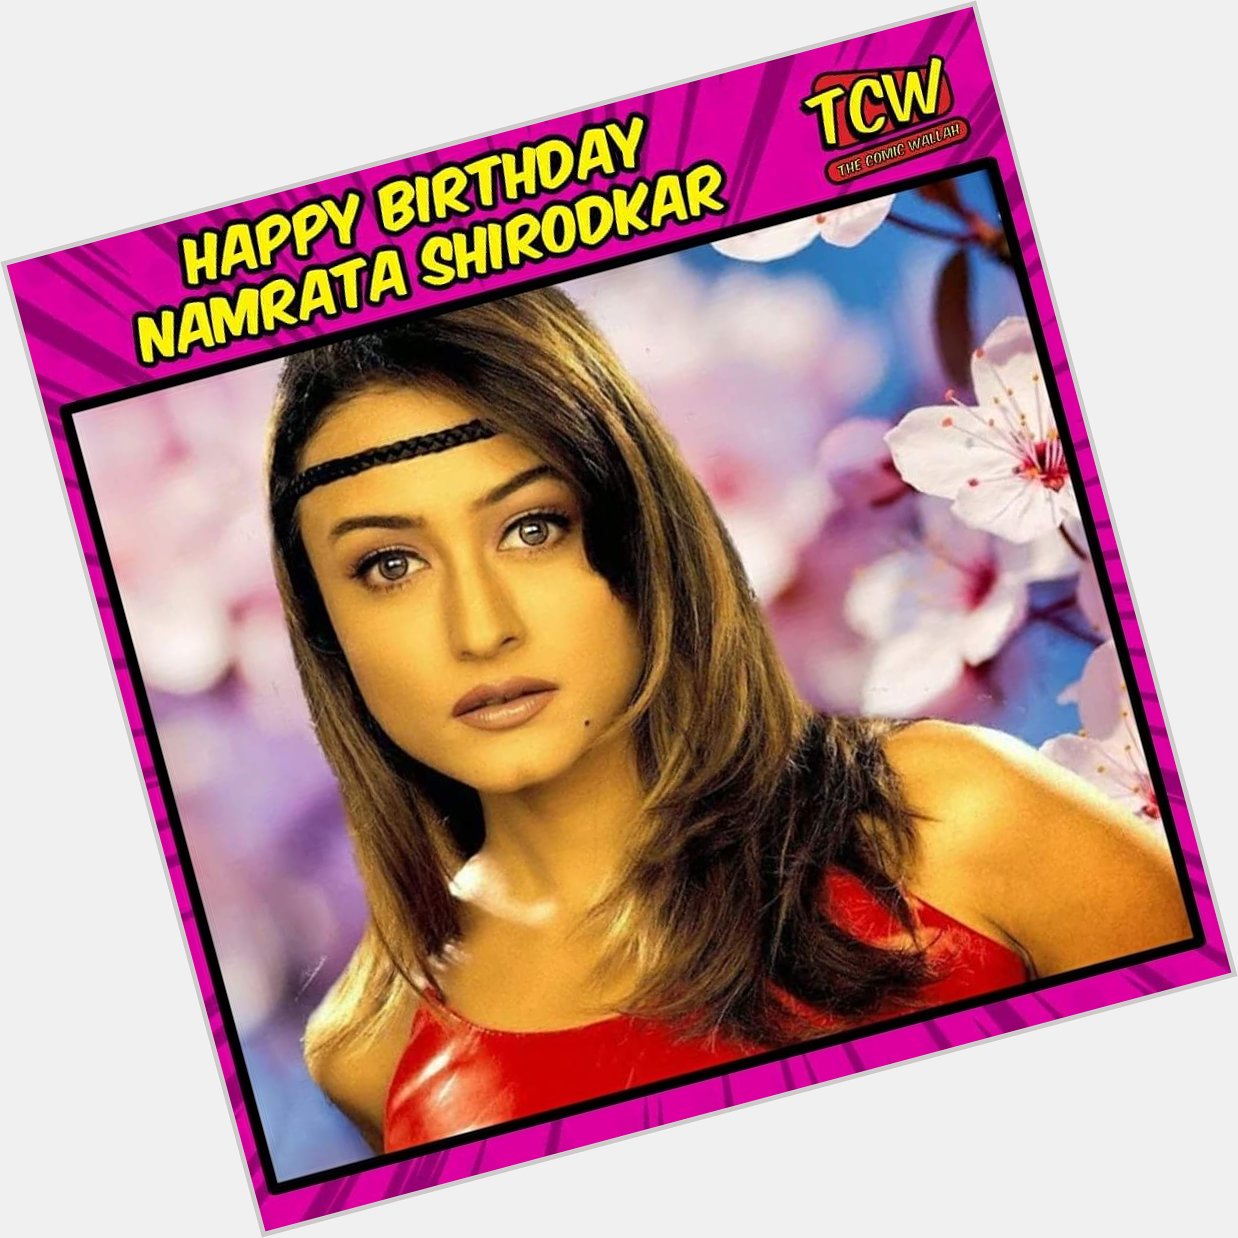 Wishing Namrata Shirodkar a Very Happy Birthday. 